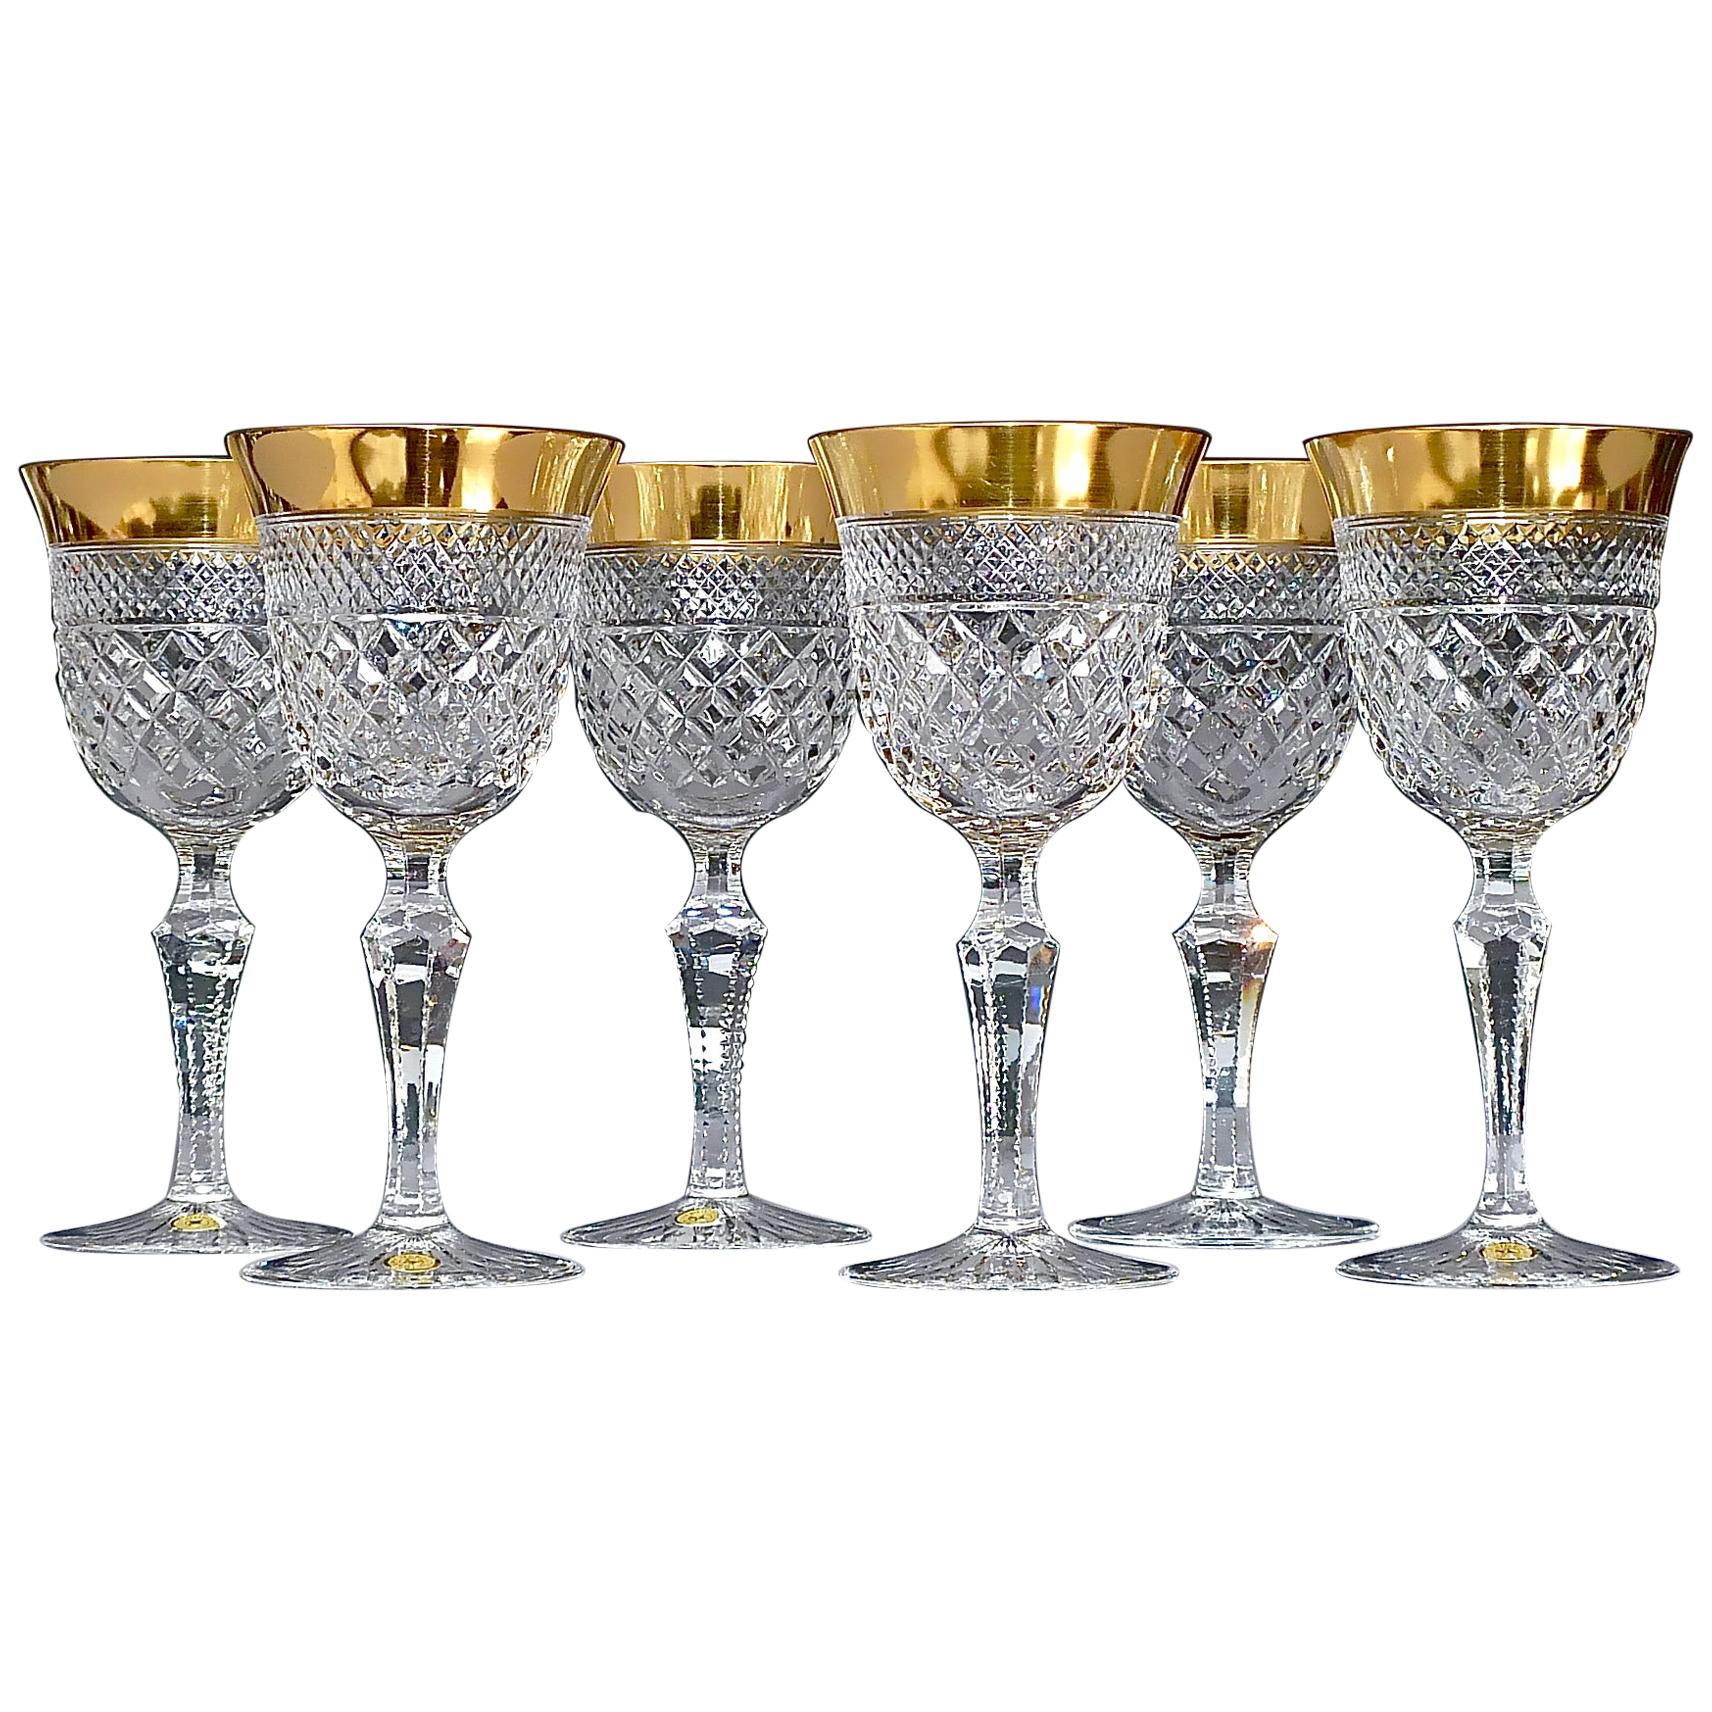 Precious 6 White Wine Glasses Gold Crystal Glass Stemware Josephinenhuette Moser